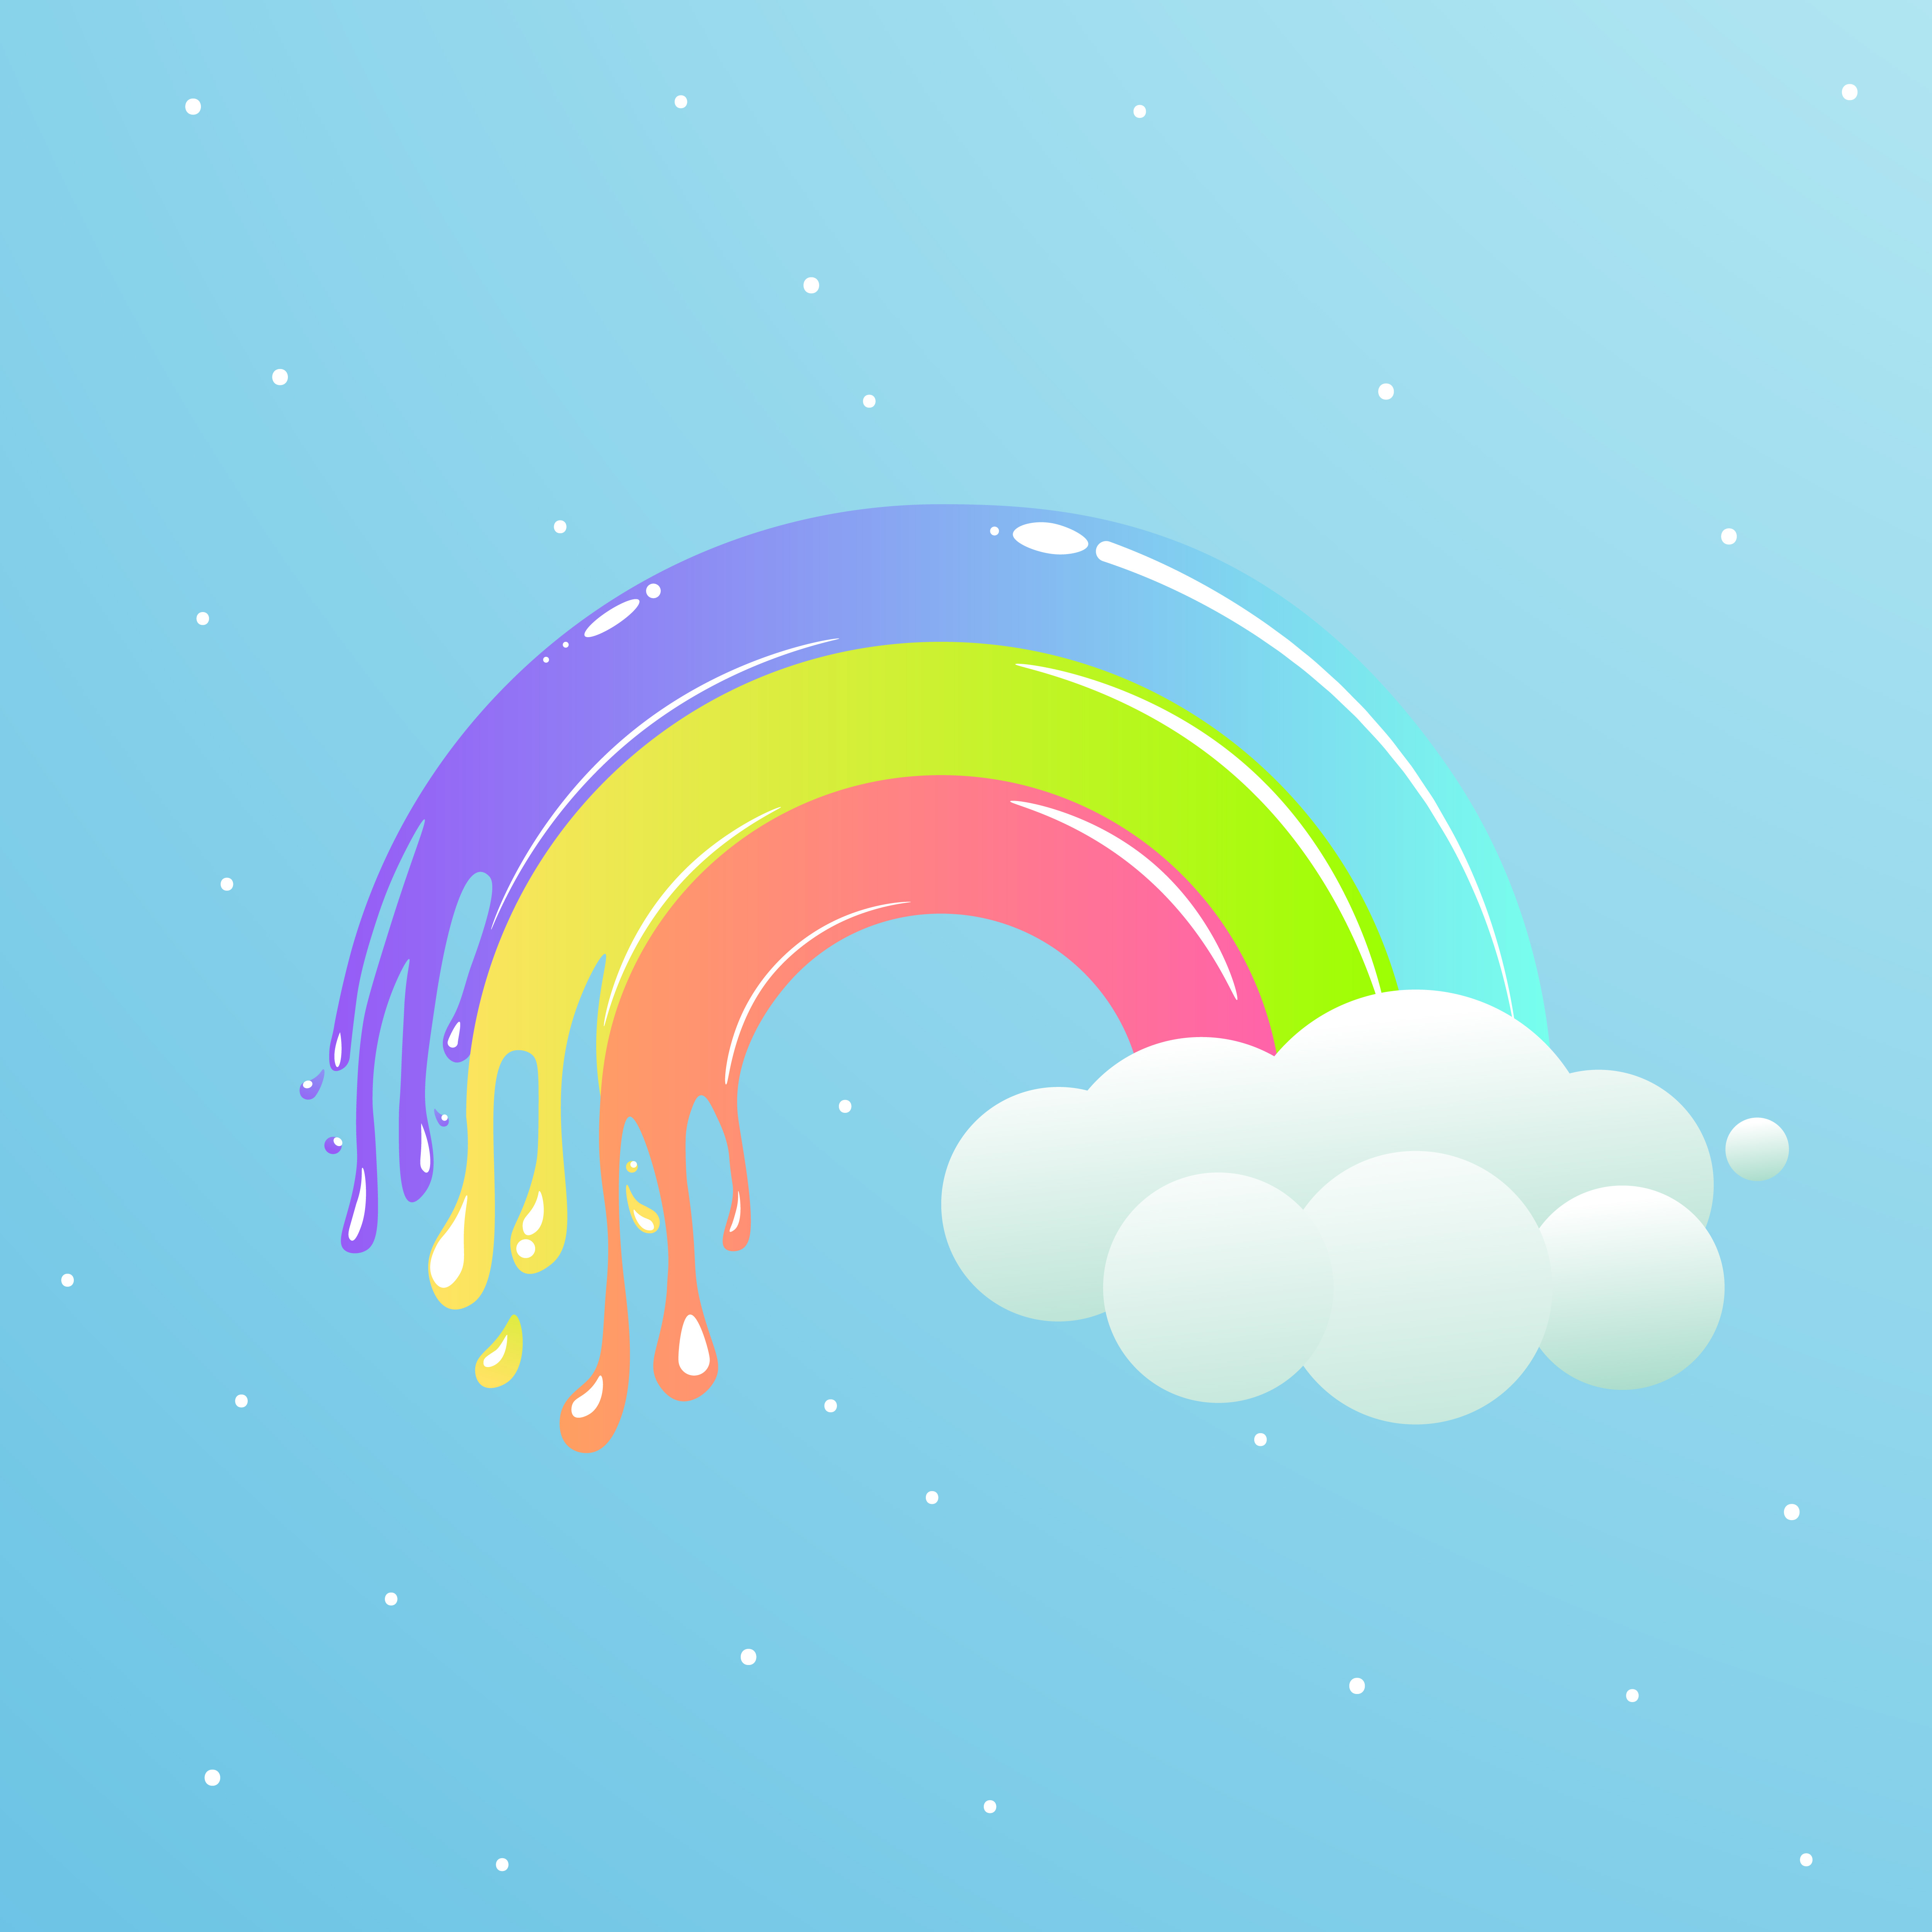 A Nice Rainbow With Clouds Against The Sky With Stars Cute Cartoon